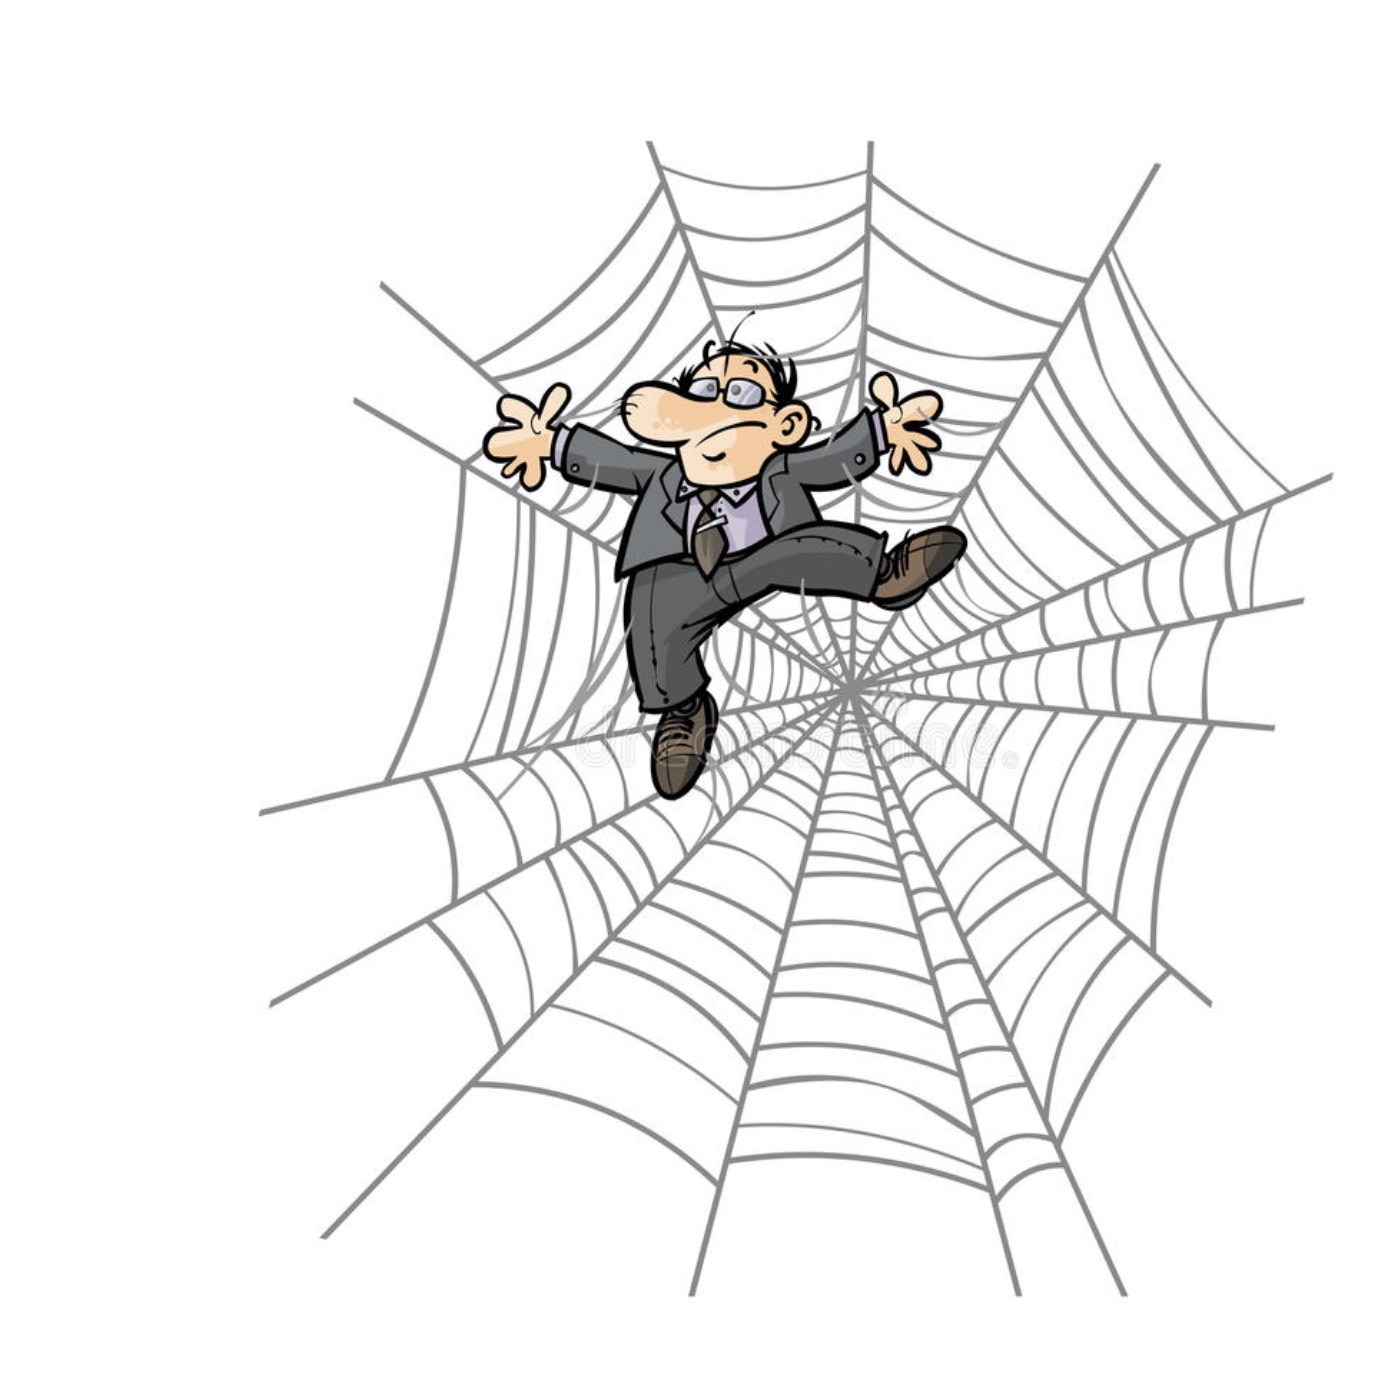 man caught in spider web